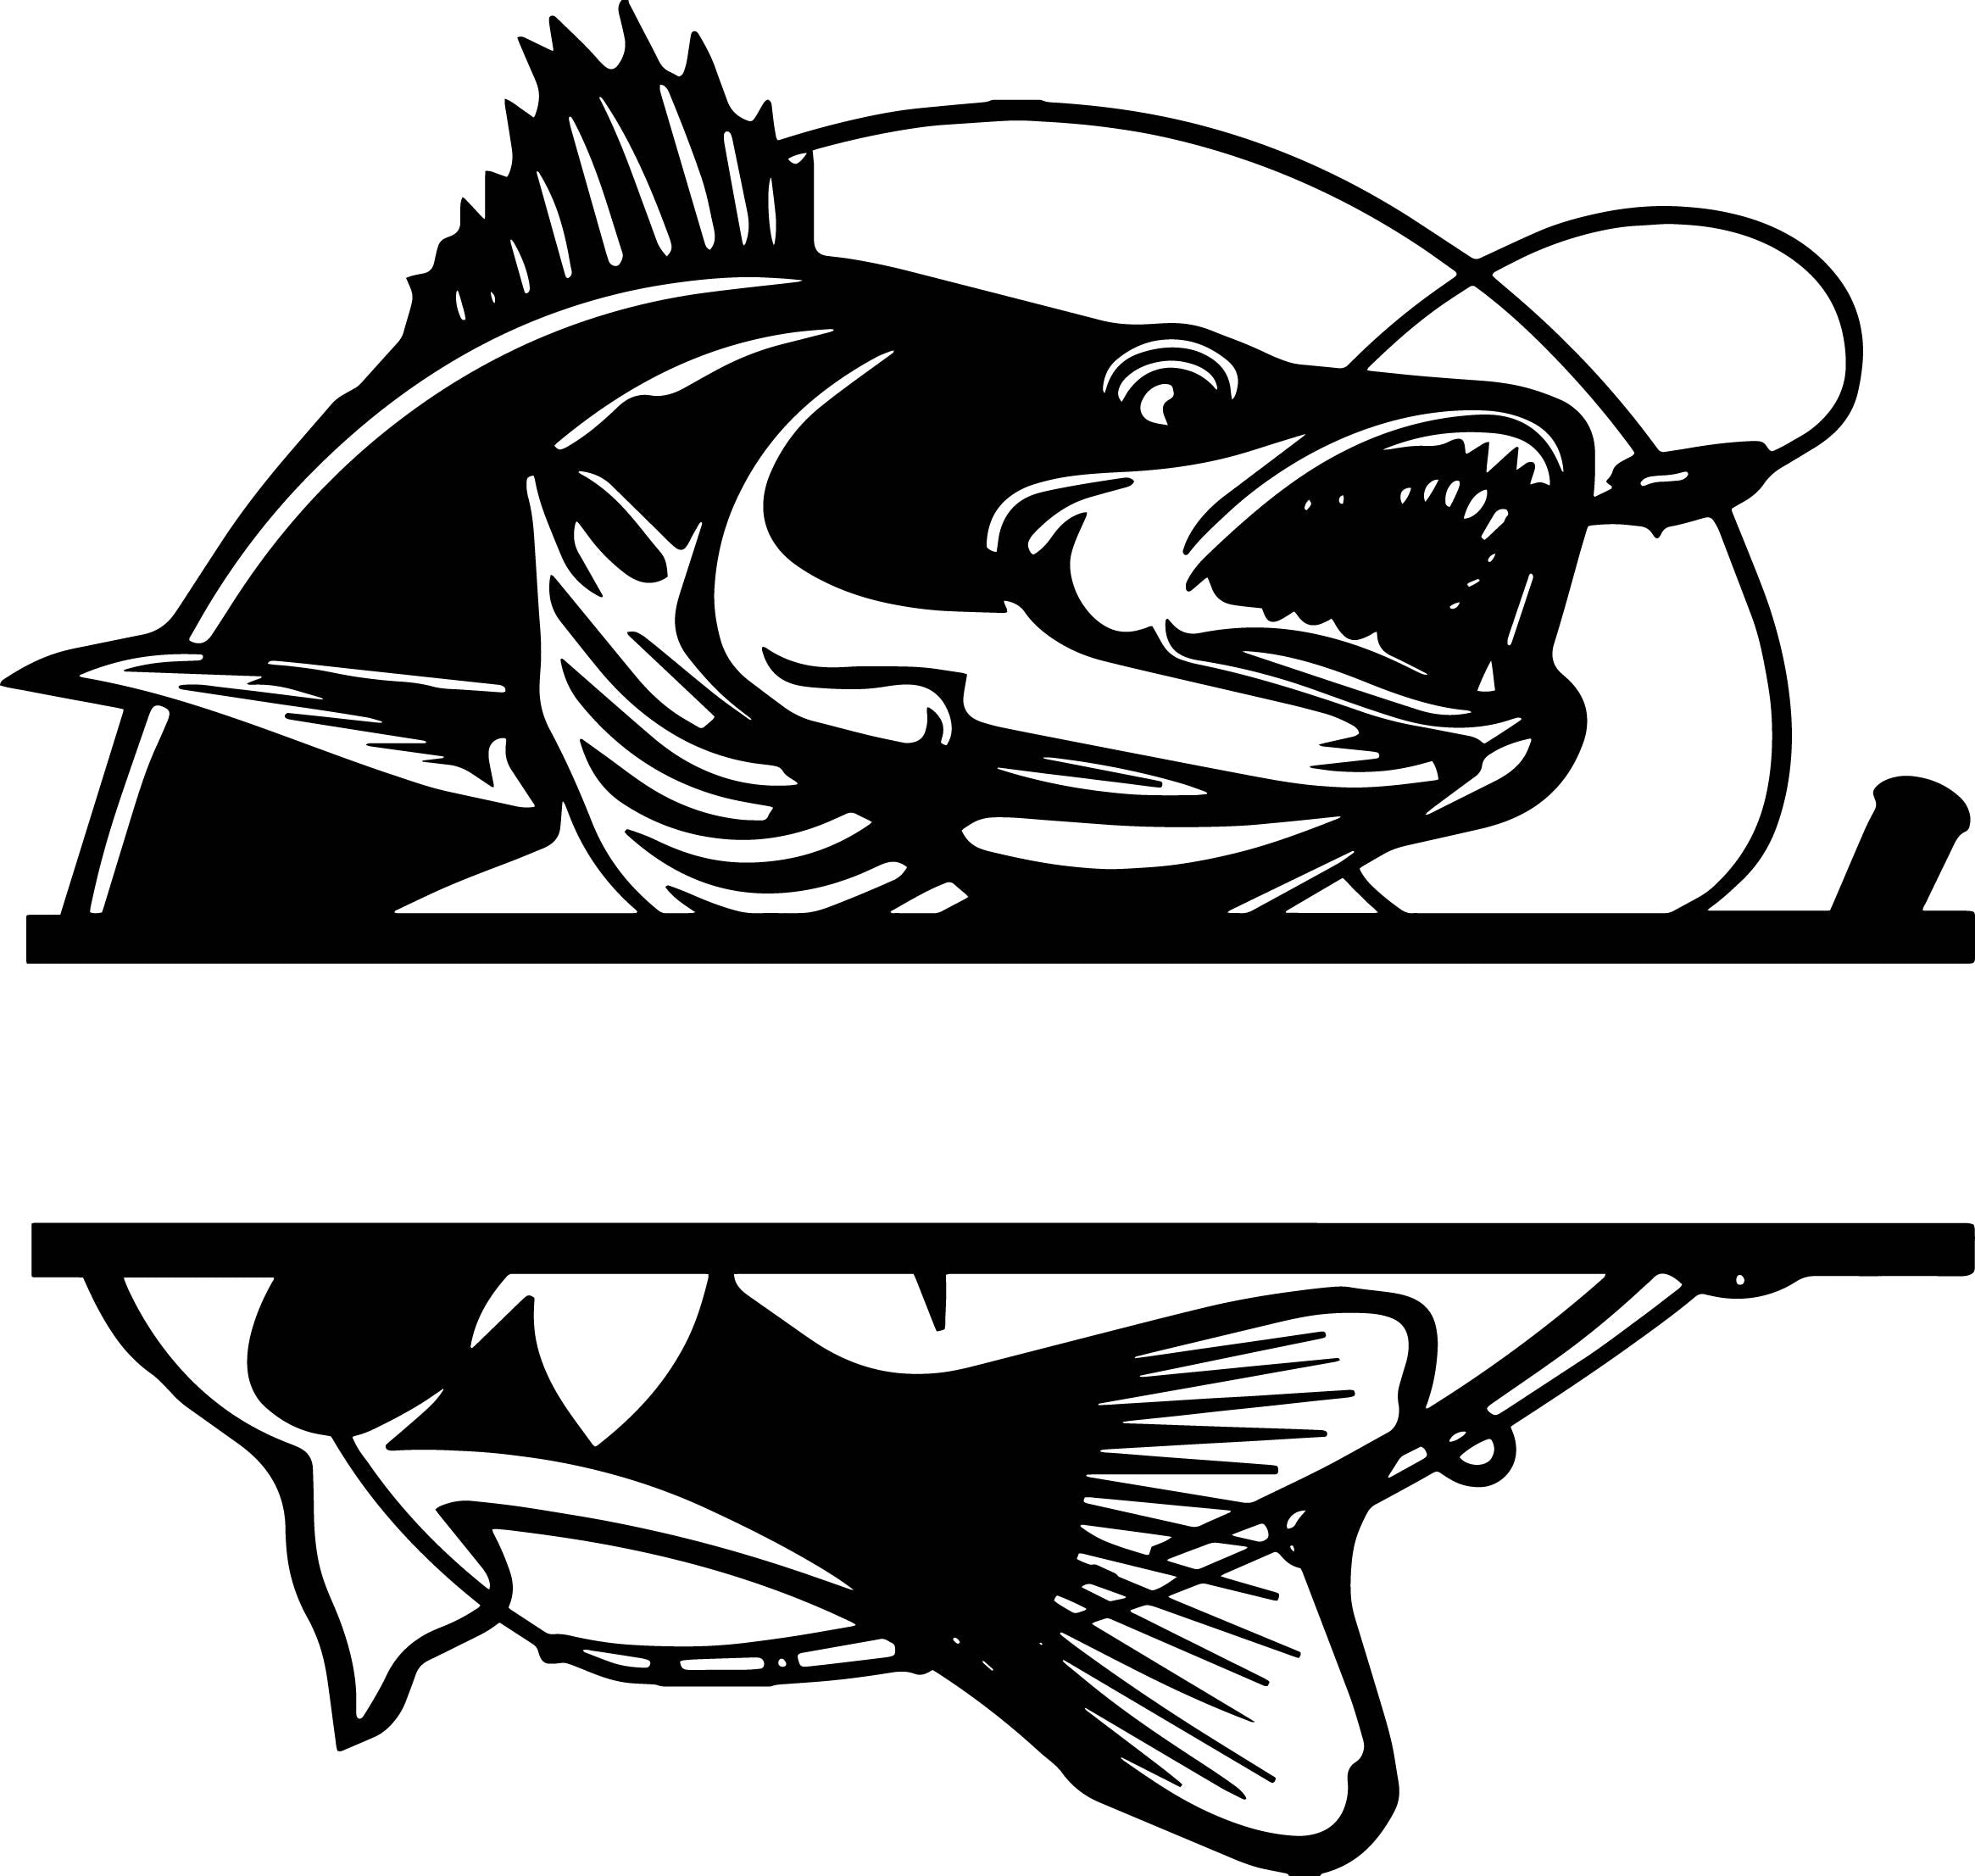 Bass Fish Acm Metal Sign - Fishing Gift for Men - Fisherman Yard Flag